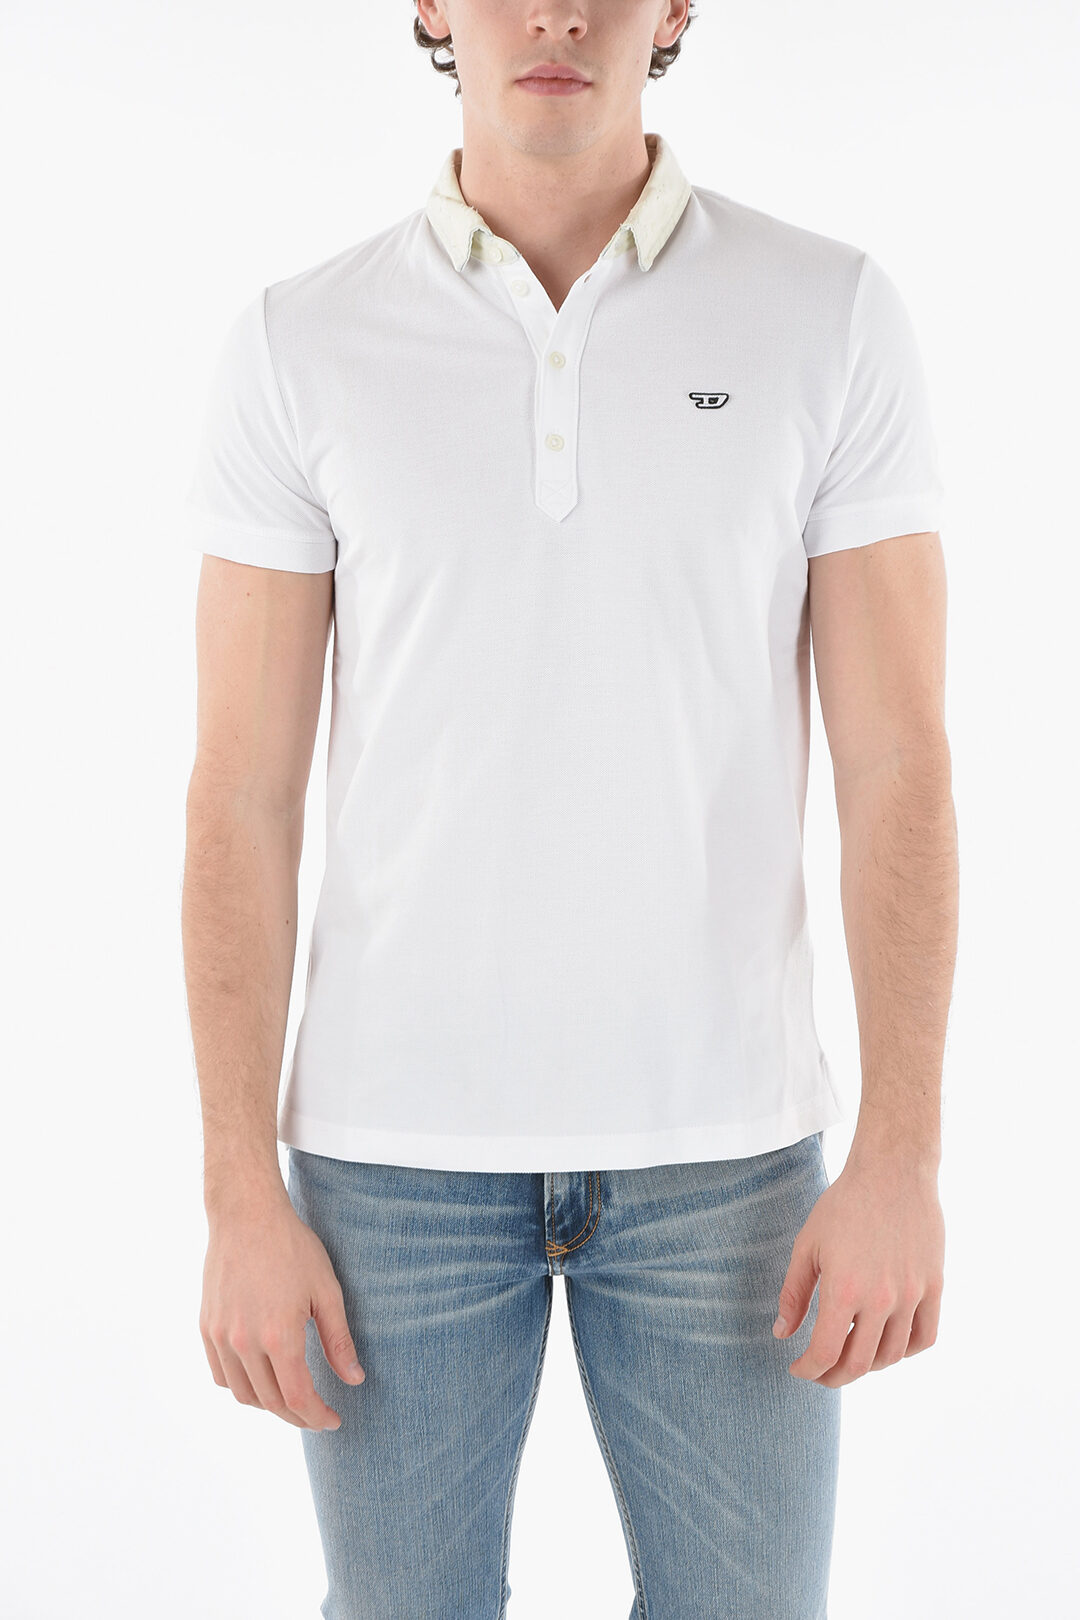 Buurt golf Desillusie Diesel Piquè Cotton T-MILES Polo Shirt men - Glamood Outlet